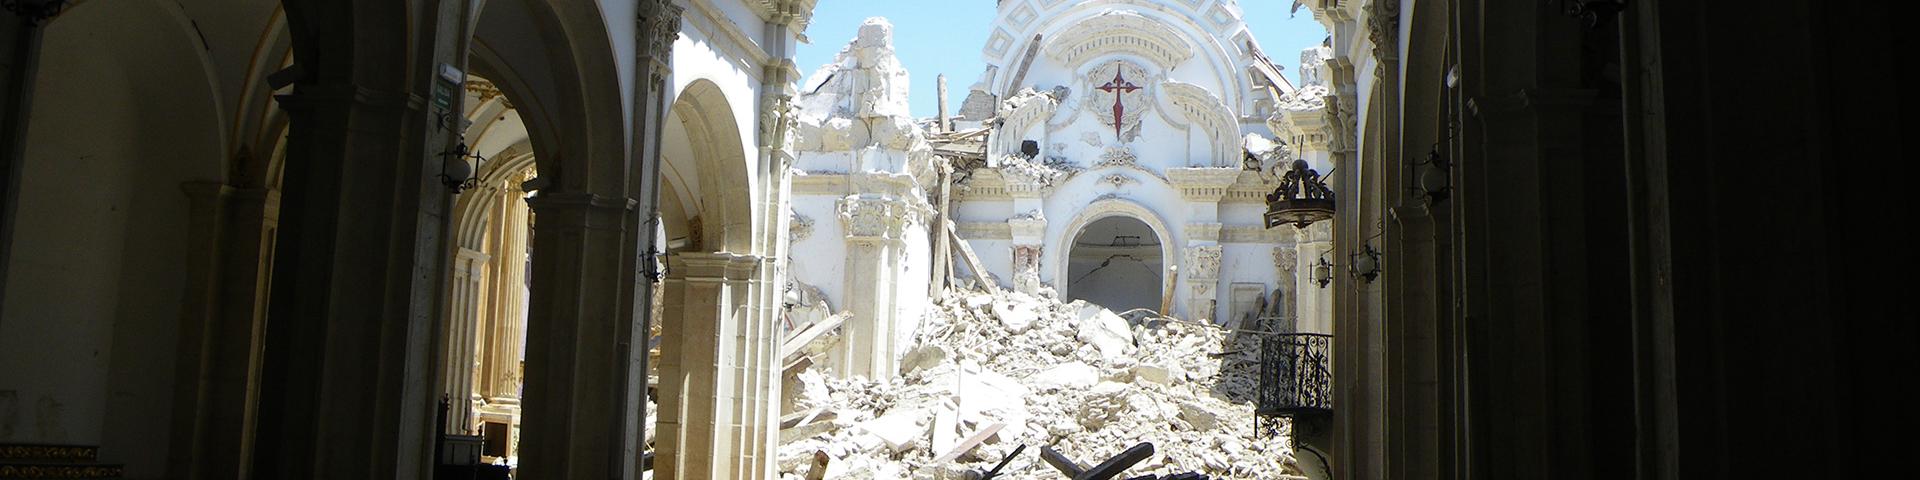 Damage in the wake of the Lorca earthquake, Spain